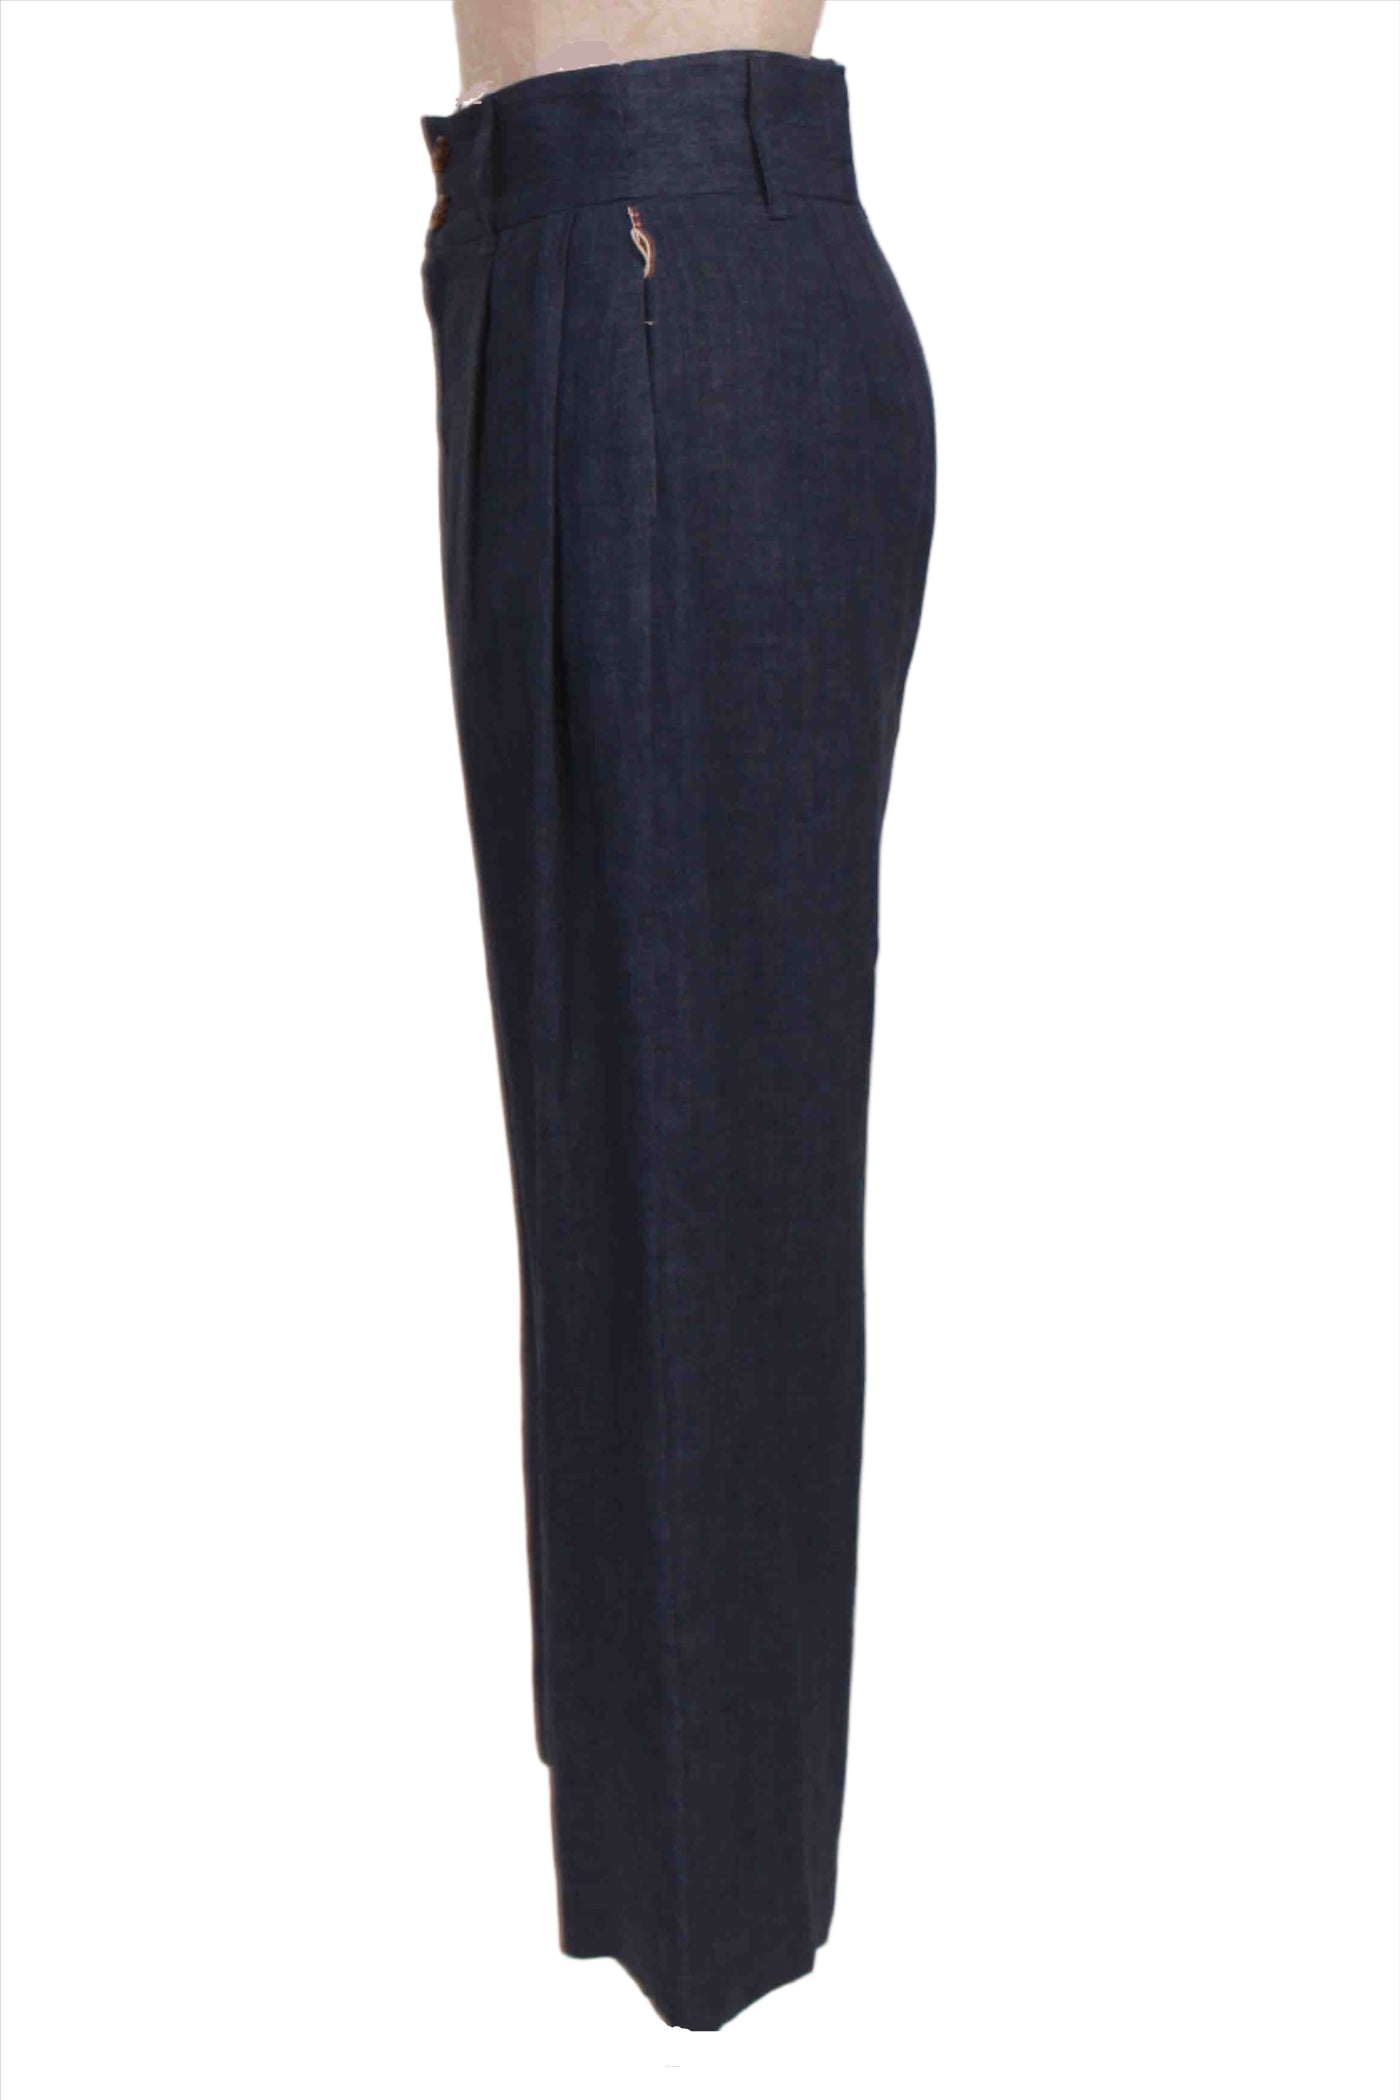 side view of Blue Linen Sadie Trousers by Fifteen Twenty